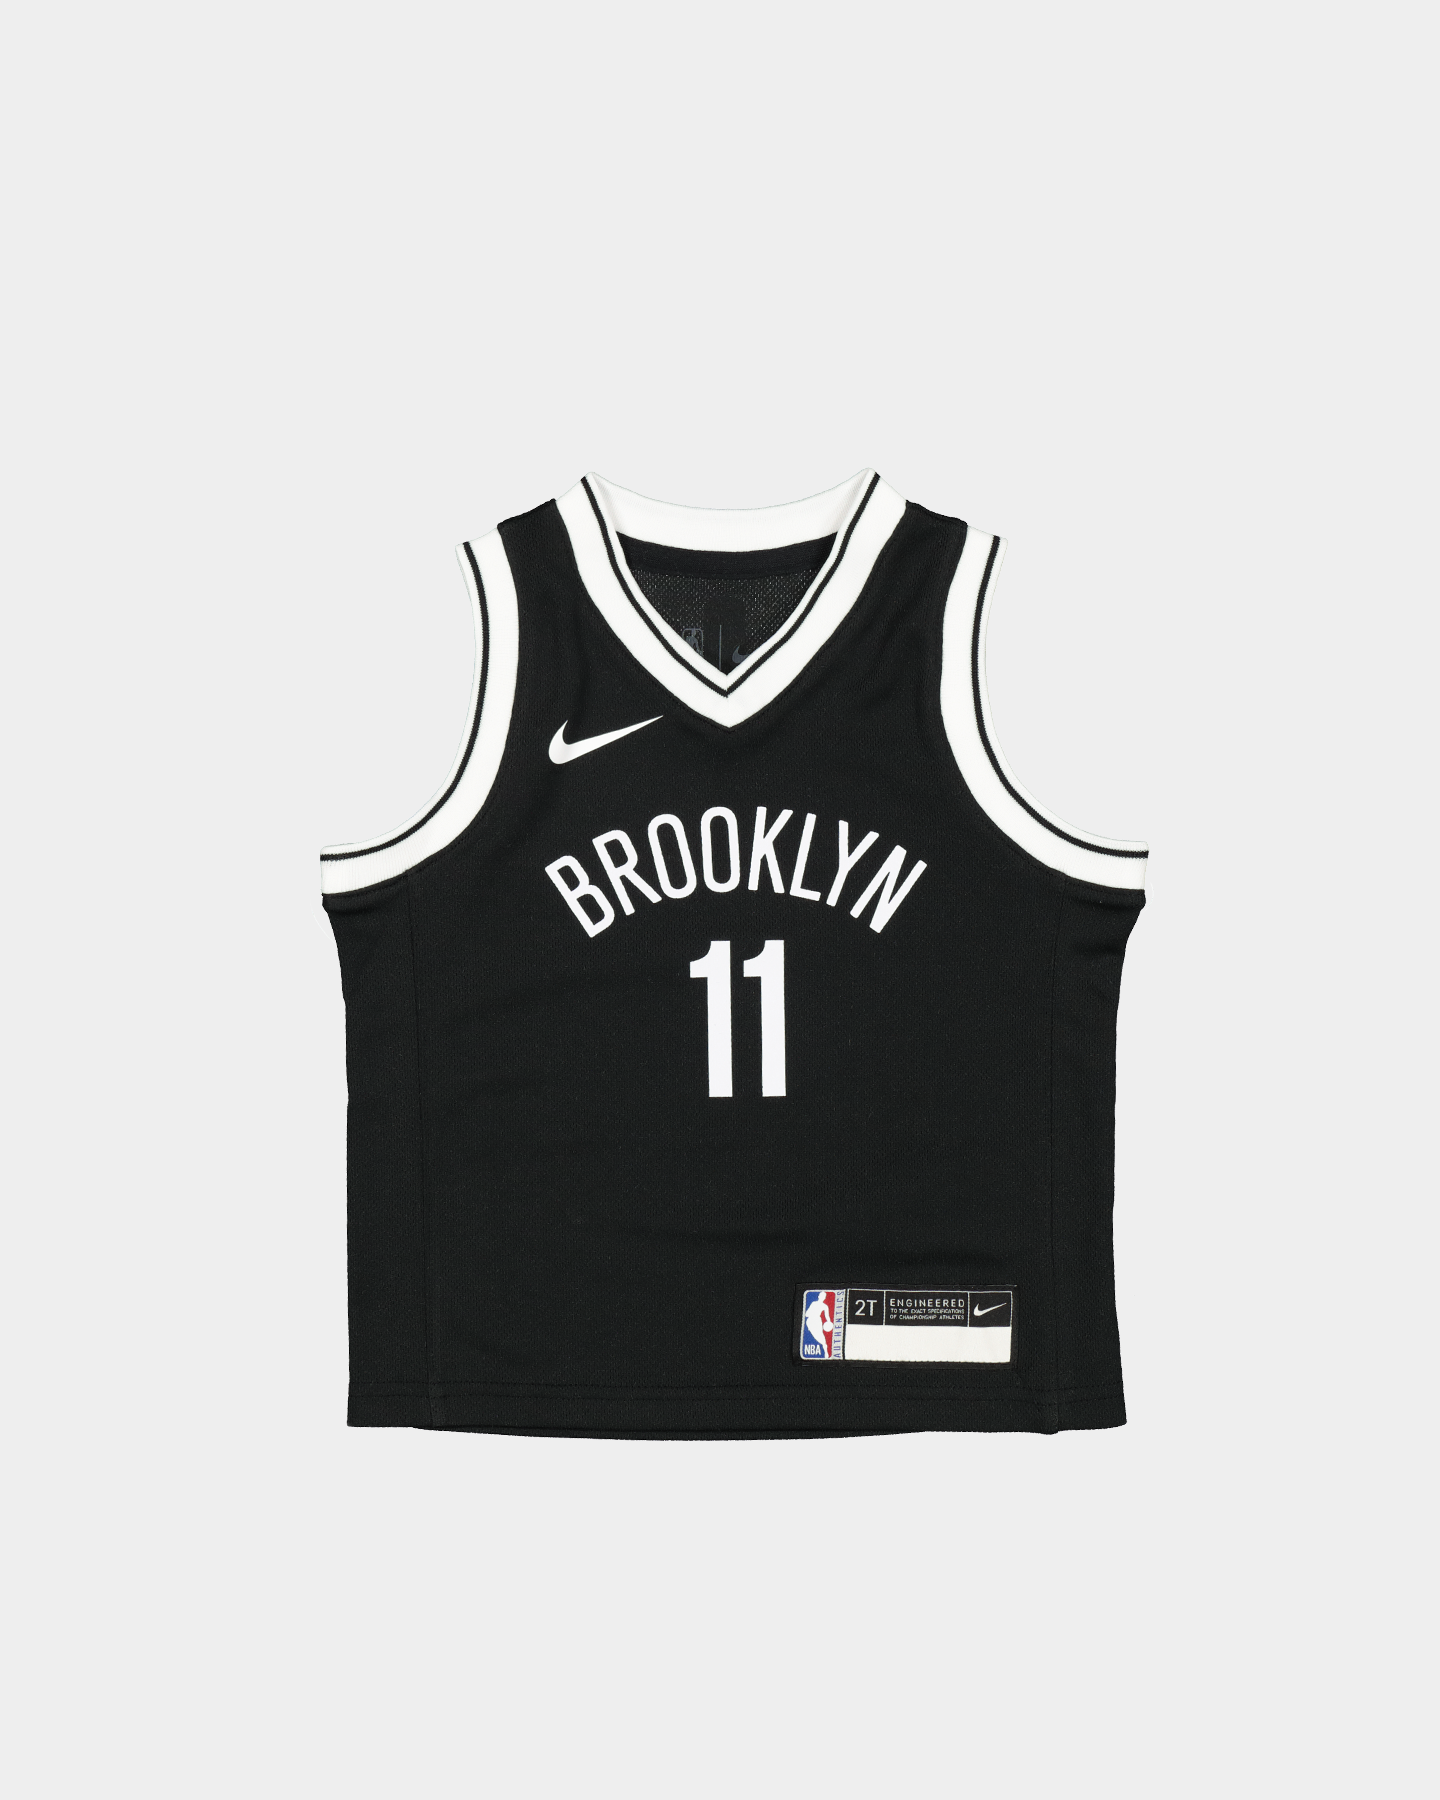 brooklyn black jersey